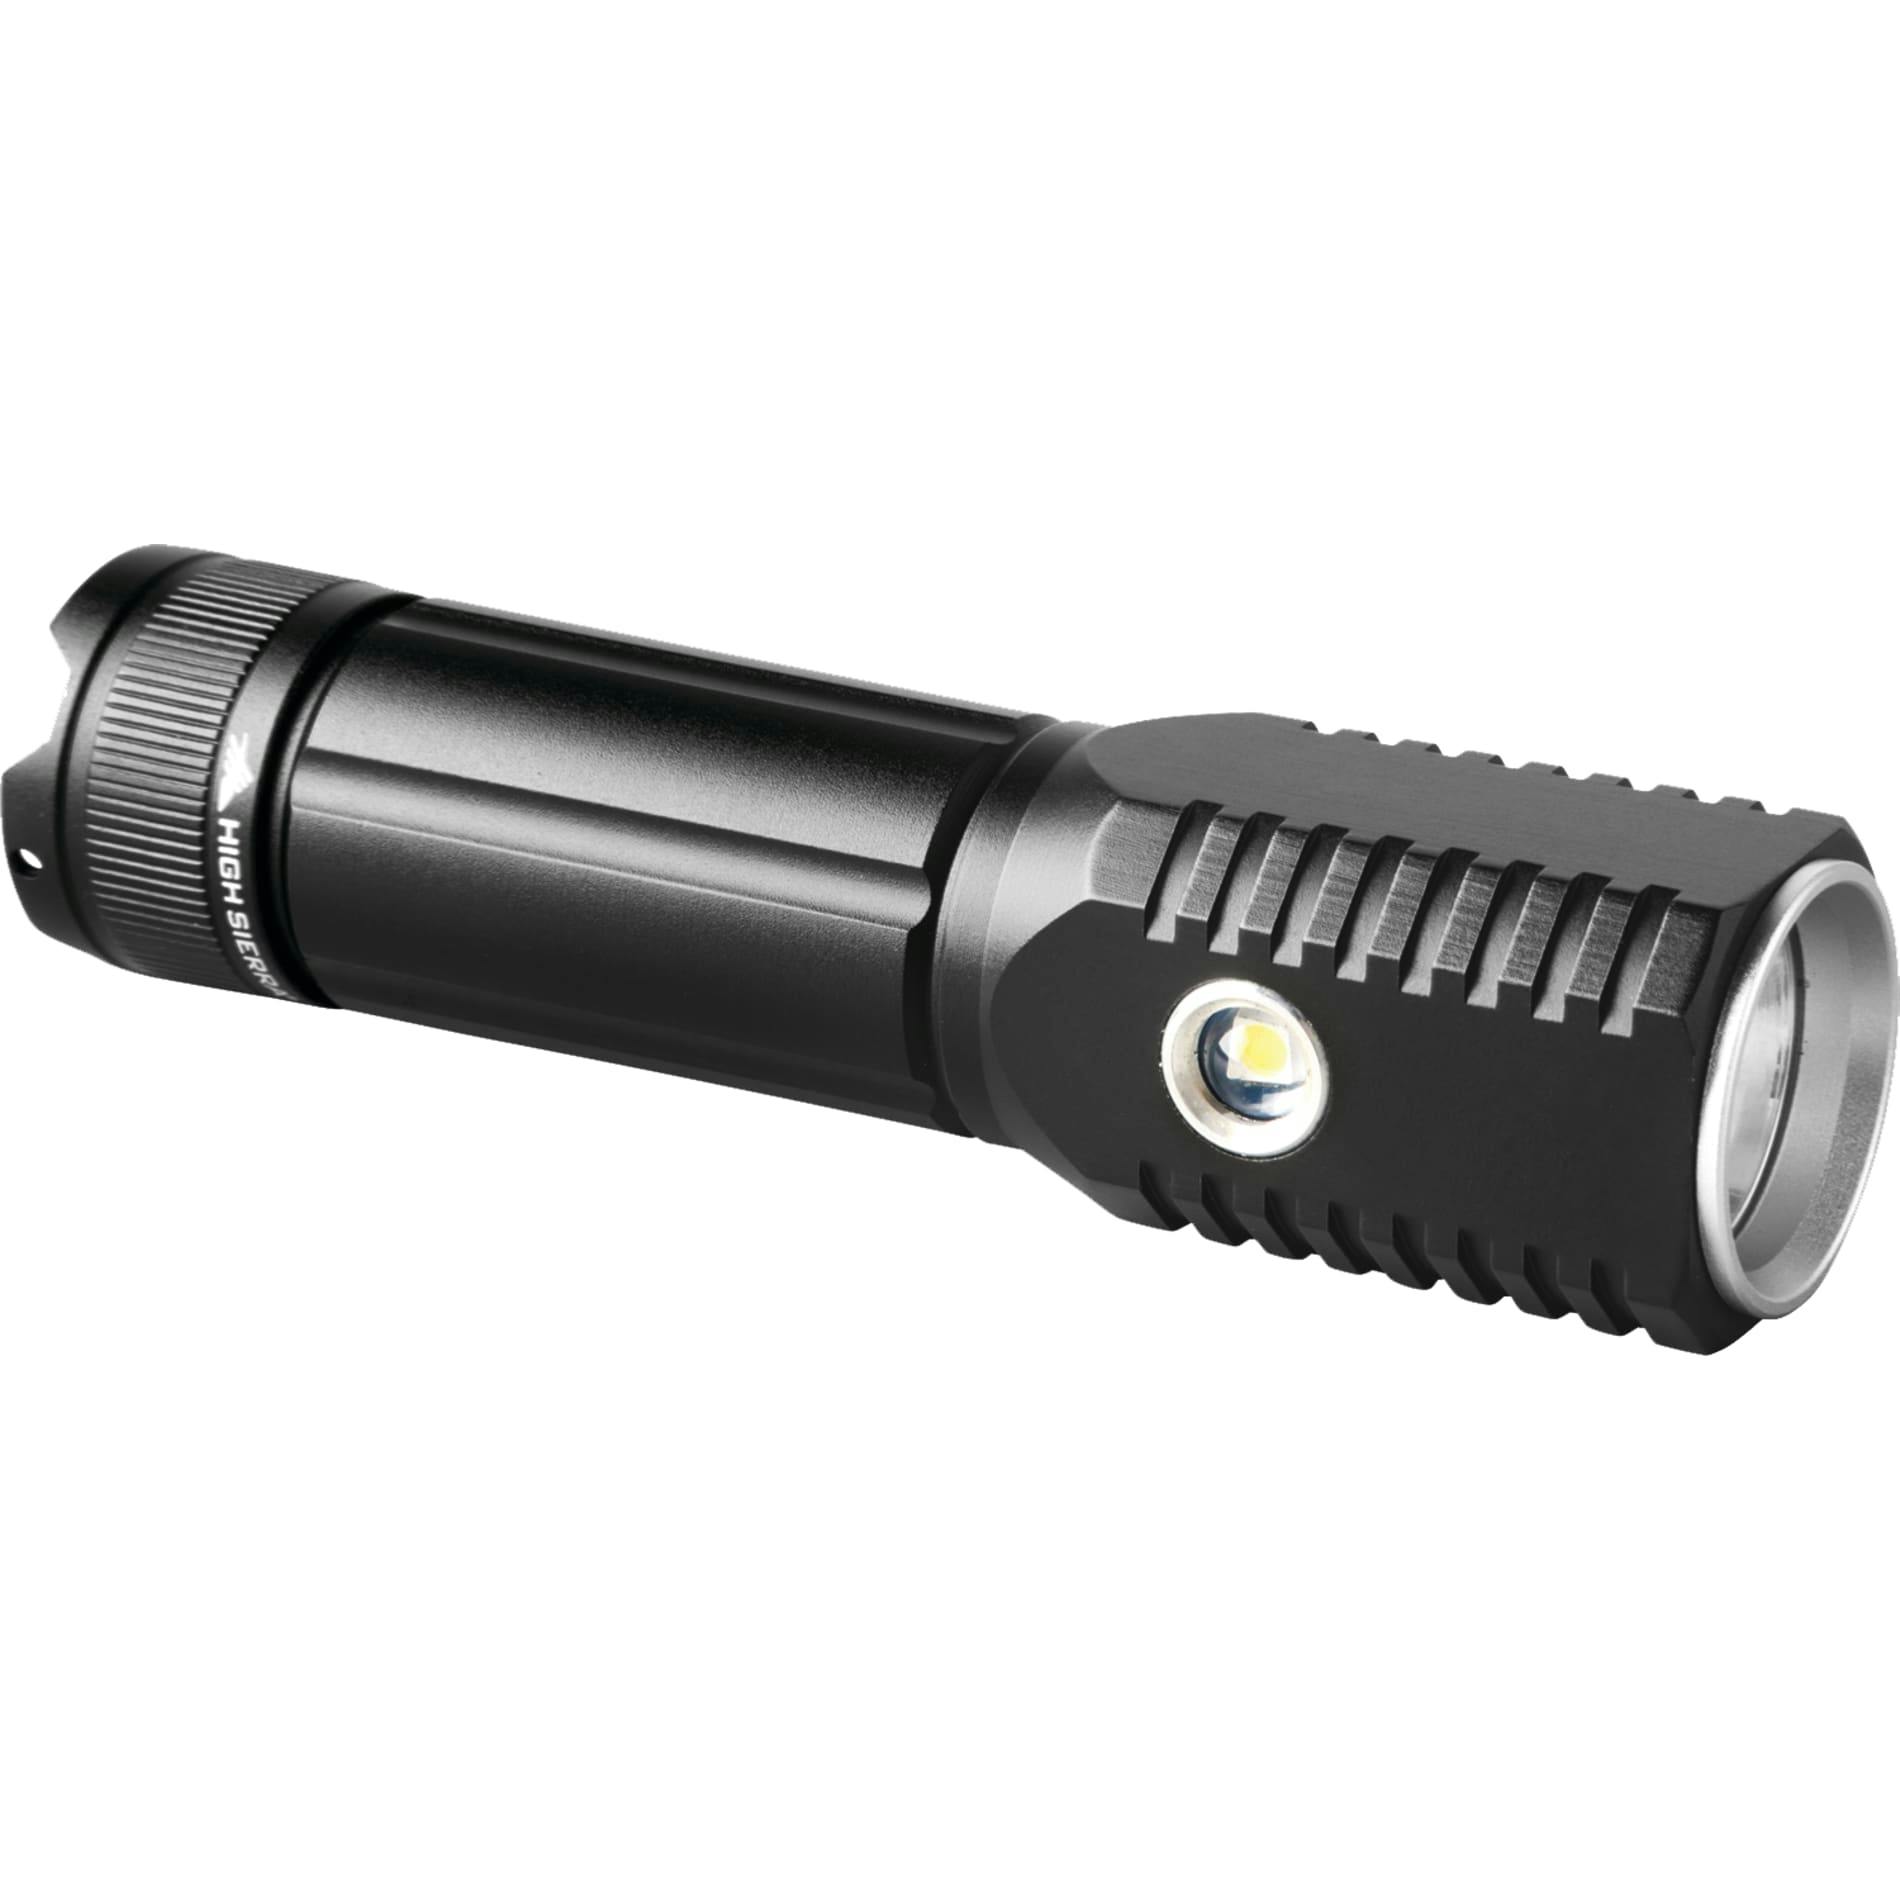 High Sierra® 3W CREE XPE LED Flashlight - additional Image 4